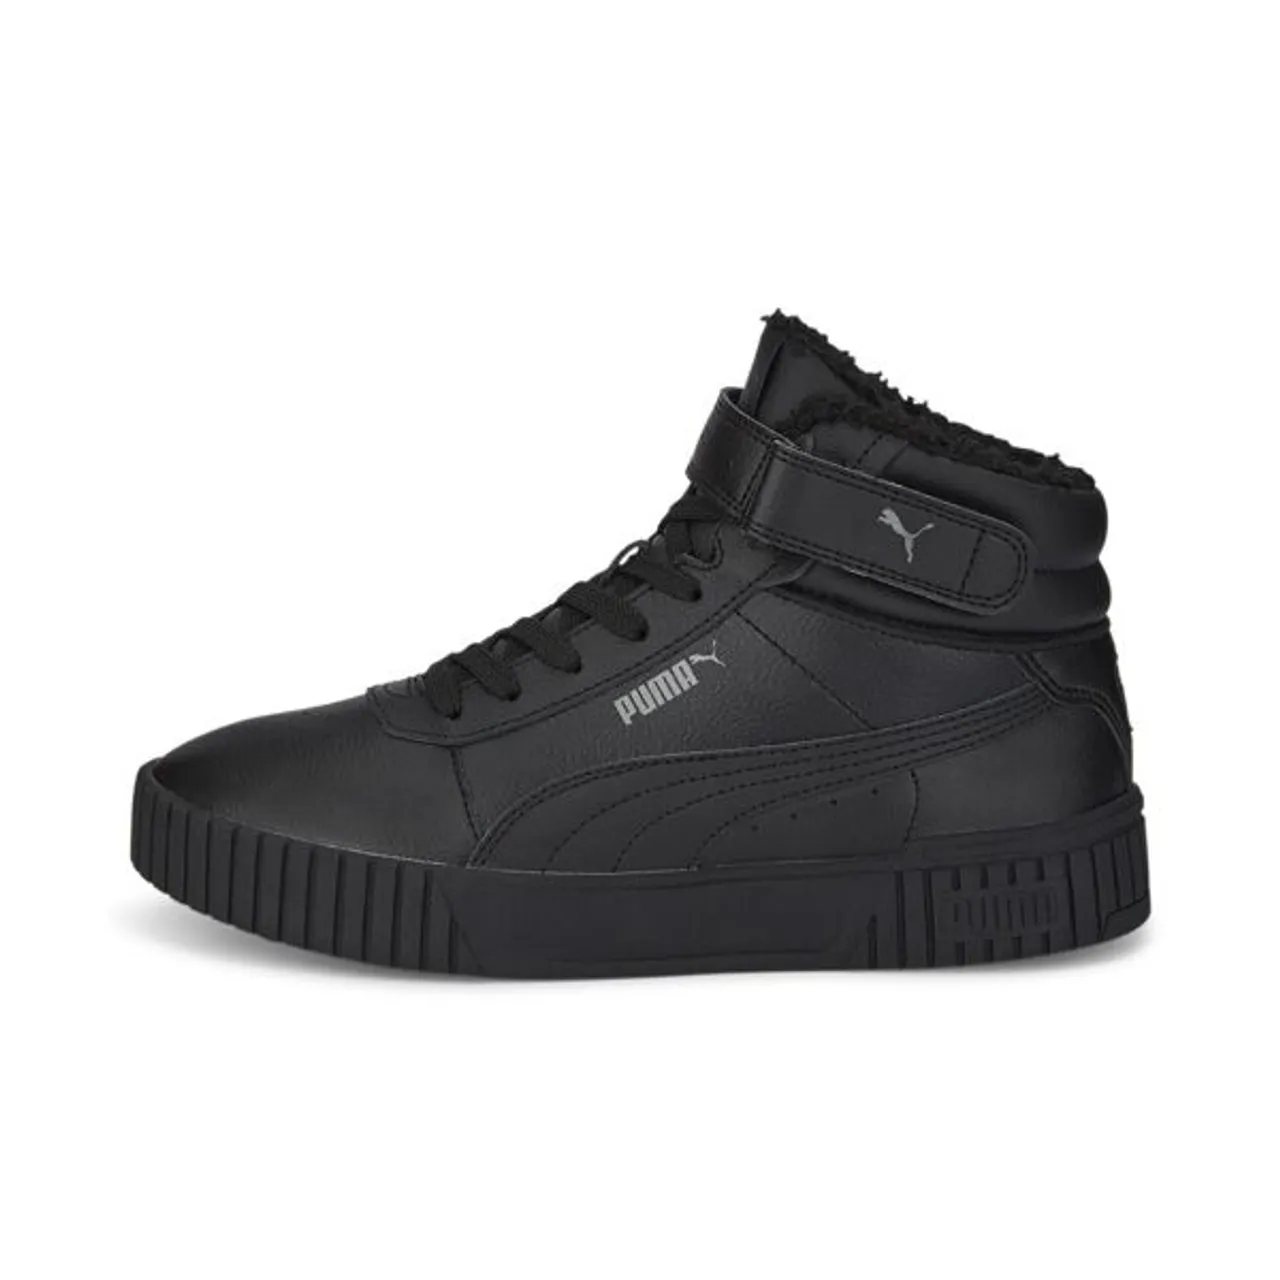 Sneaker PUMA "Carina 2.0 Mid Winter Sneakers Damen" Gr. 38.5, schwarz (black dark shadow gray) Schuhe Schnürstiefeletten